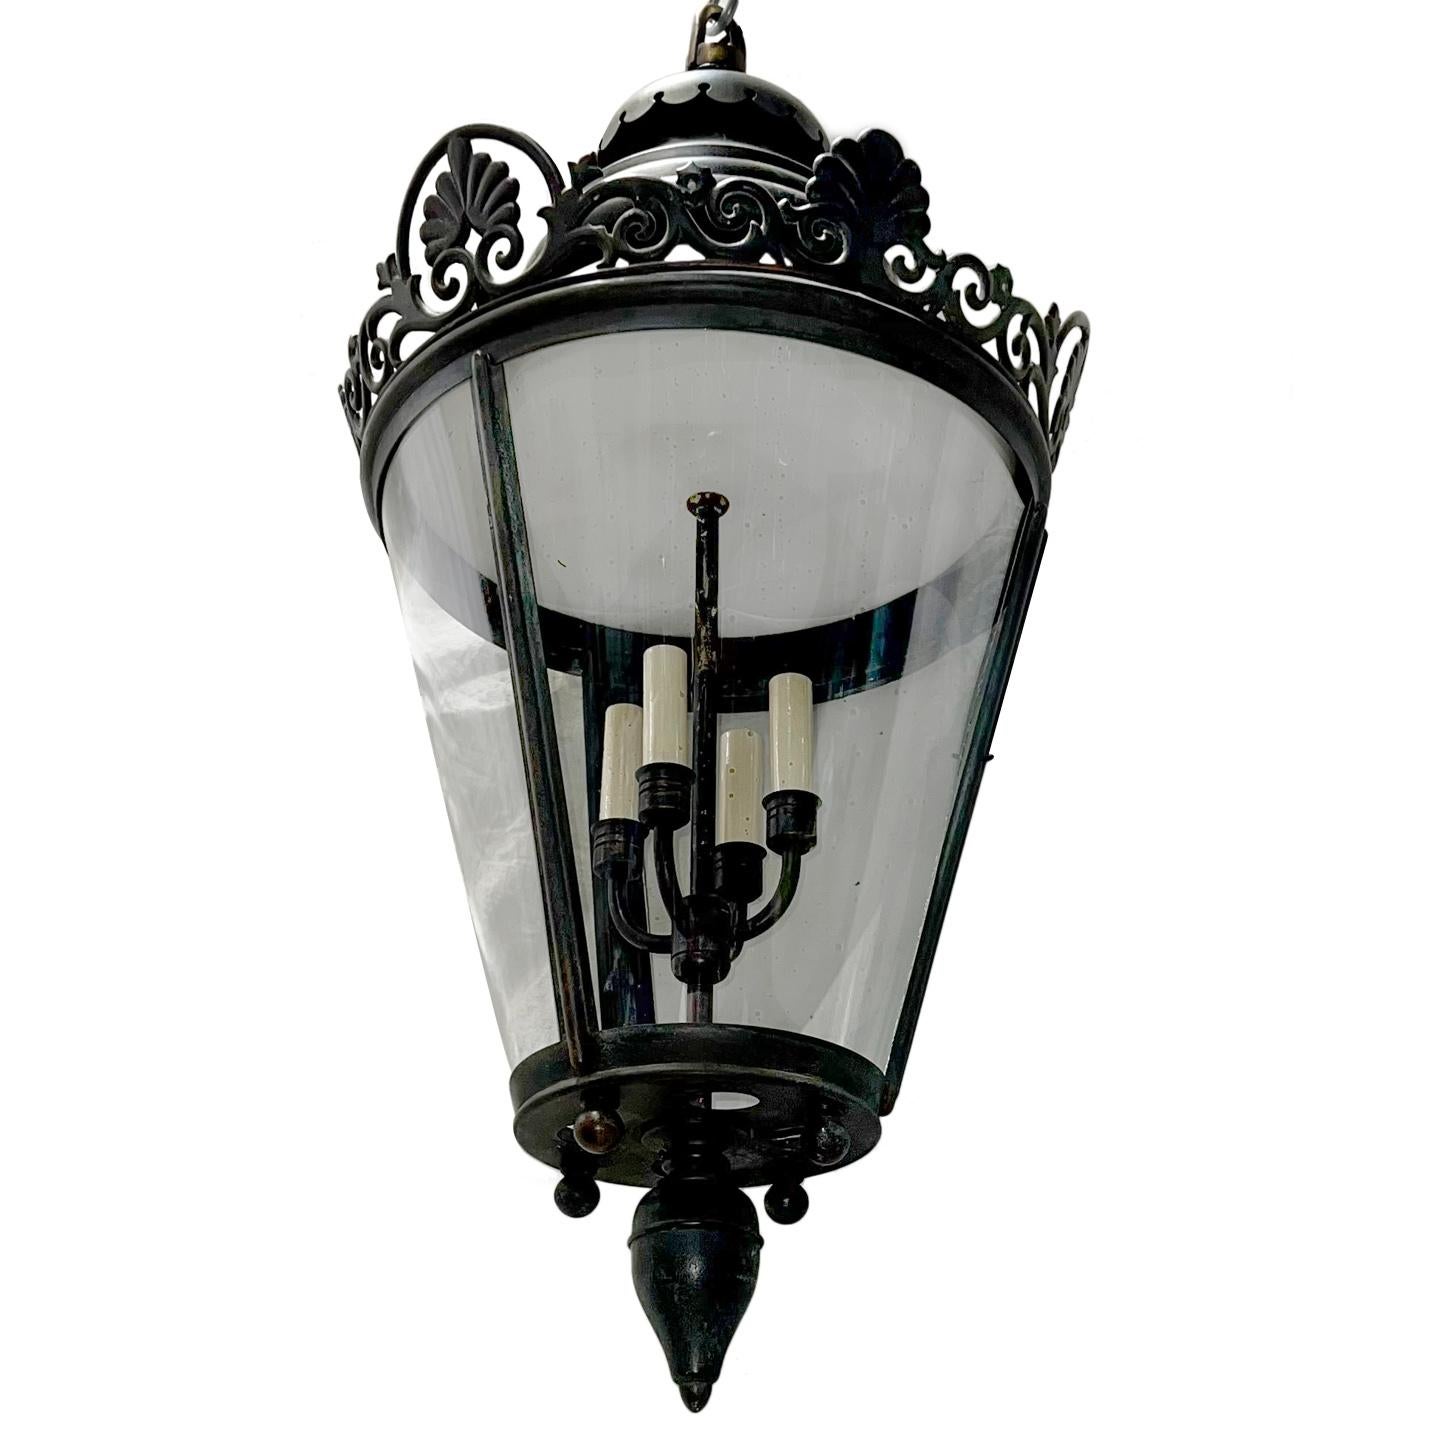 A circa 1900's English patinated bronze lantern with 4 interior lights.

Measurements:
Present drop: 38